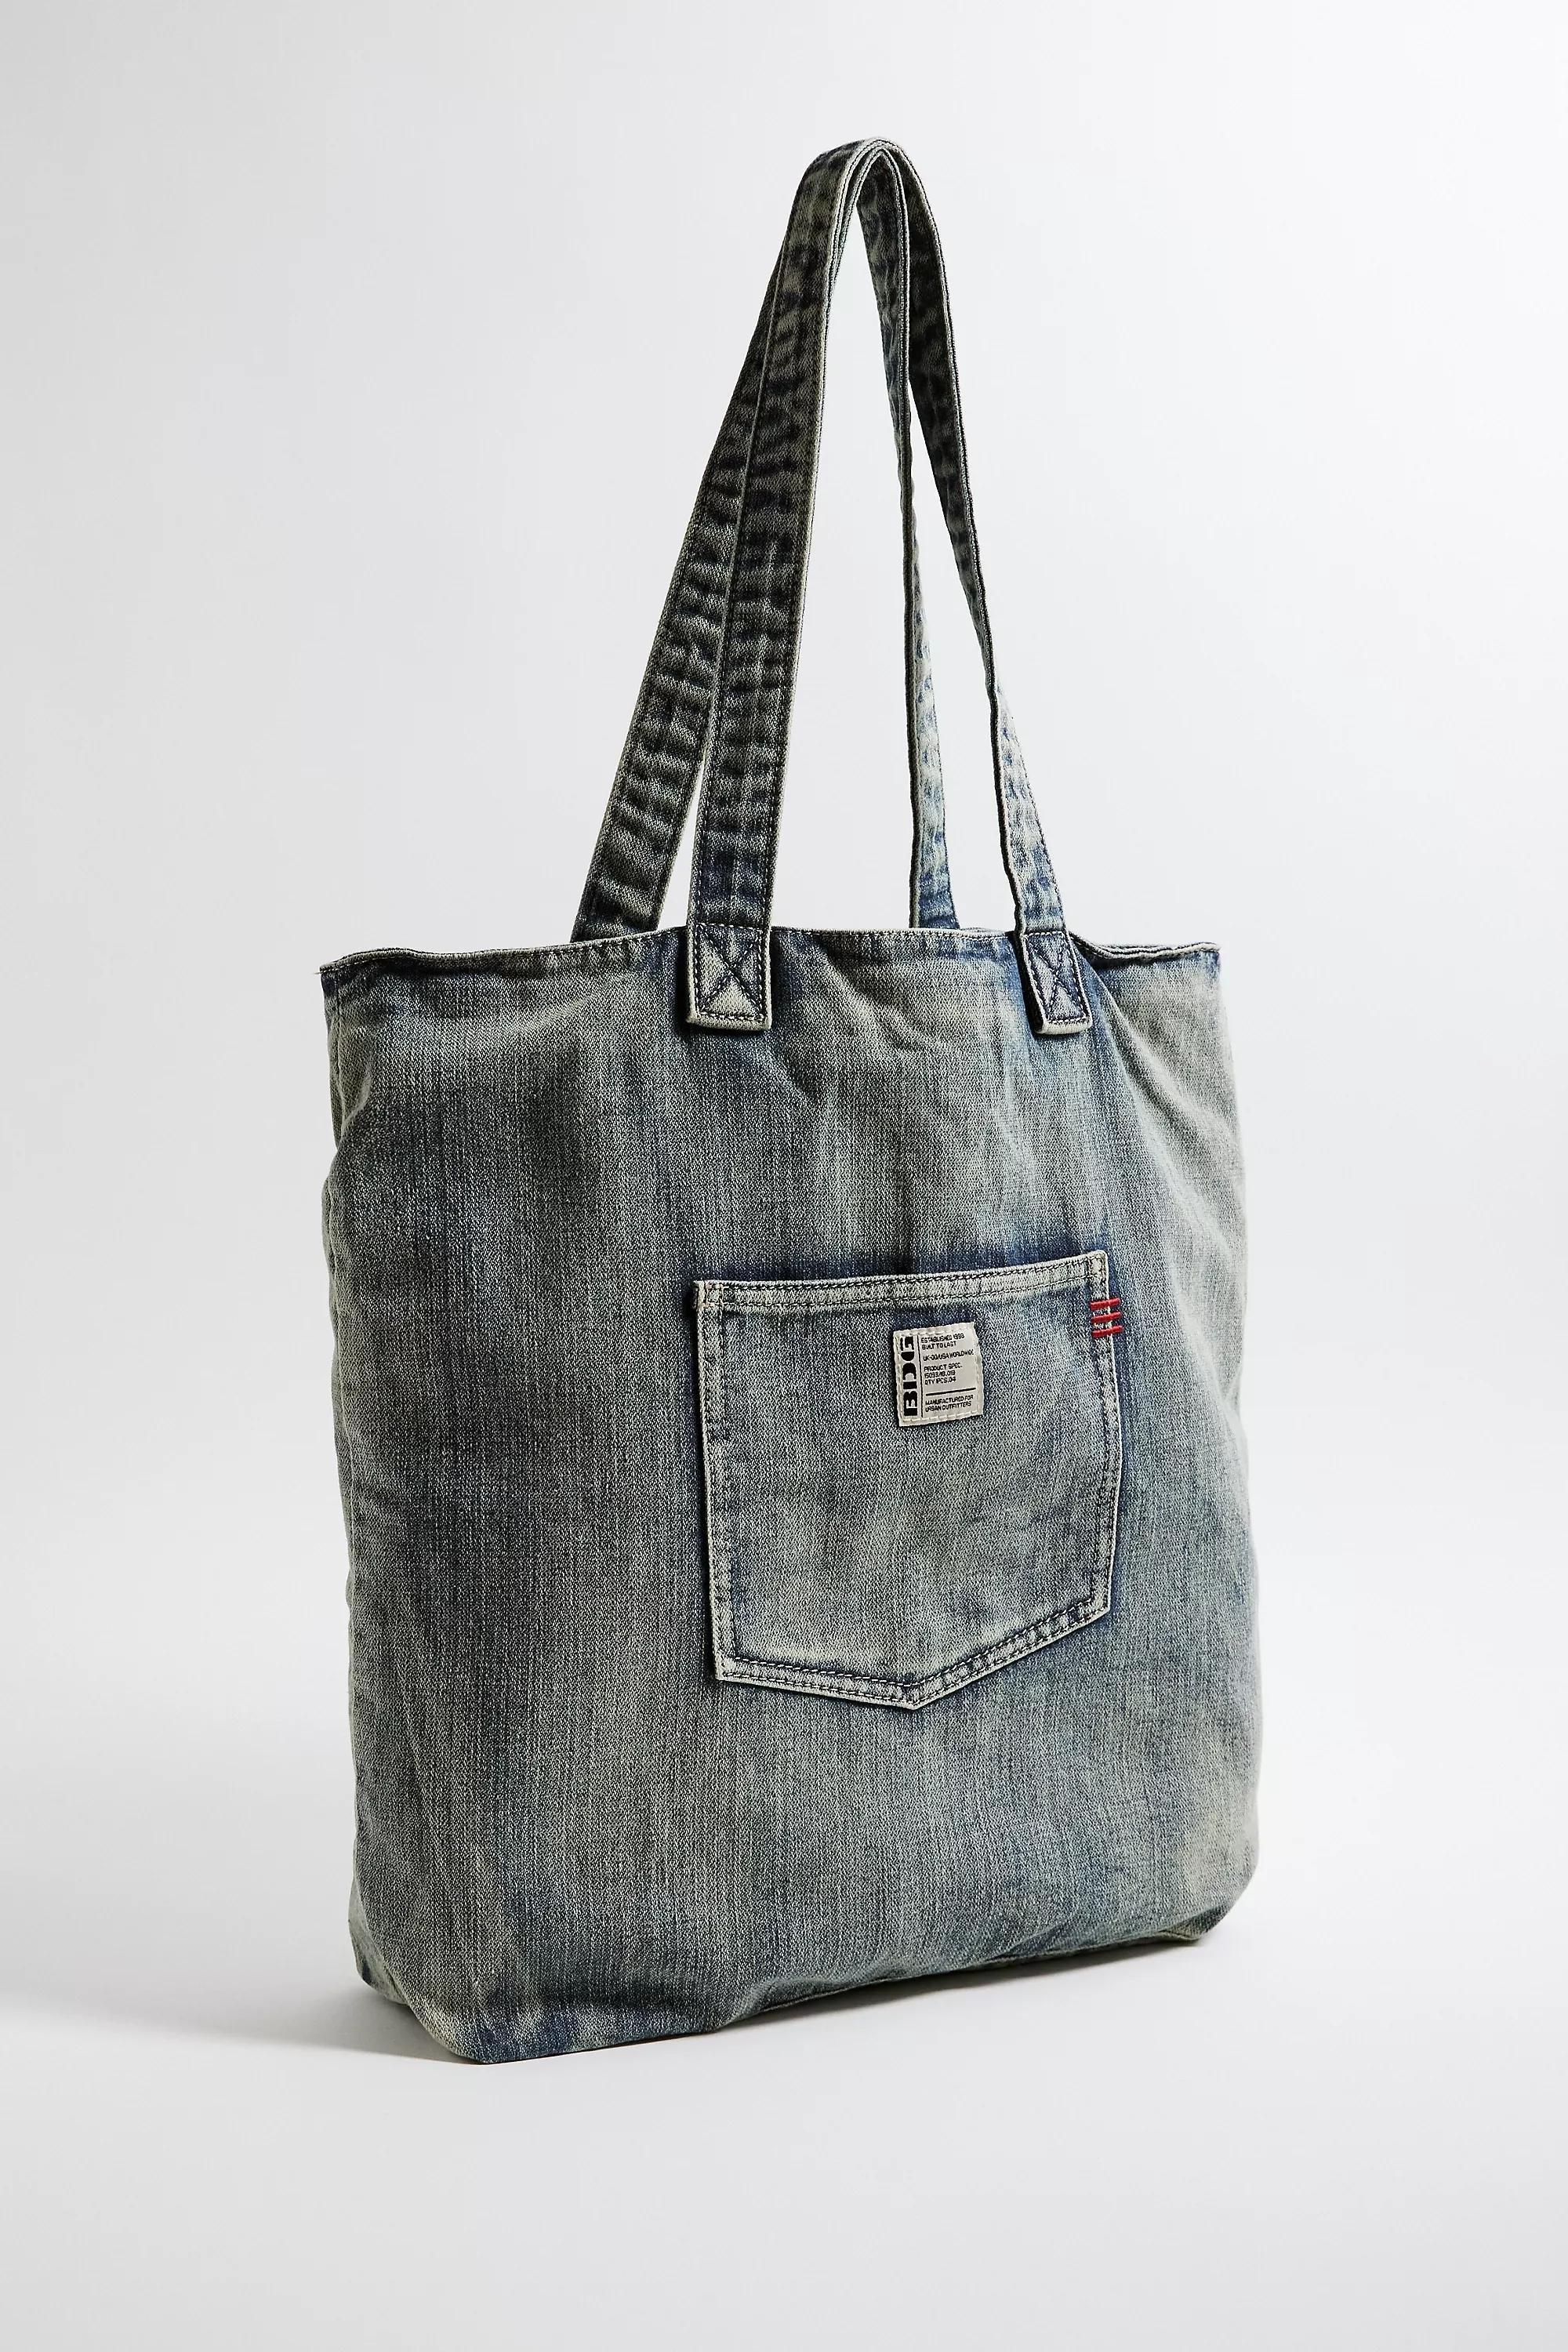 Urban Outfitters - Grey Bdg Denim Bag